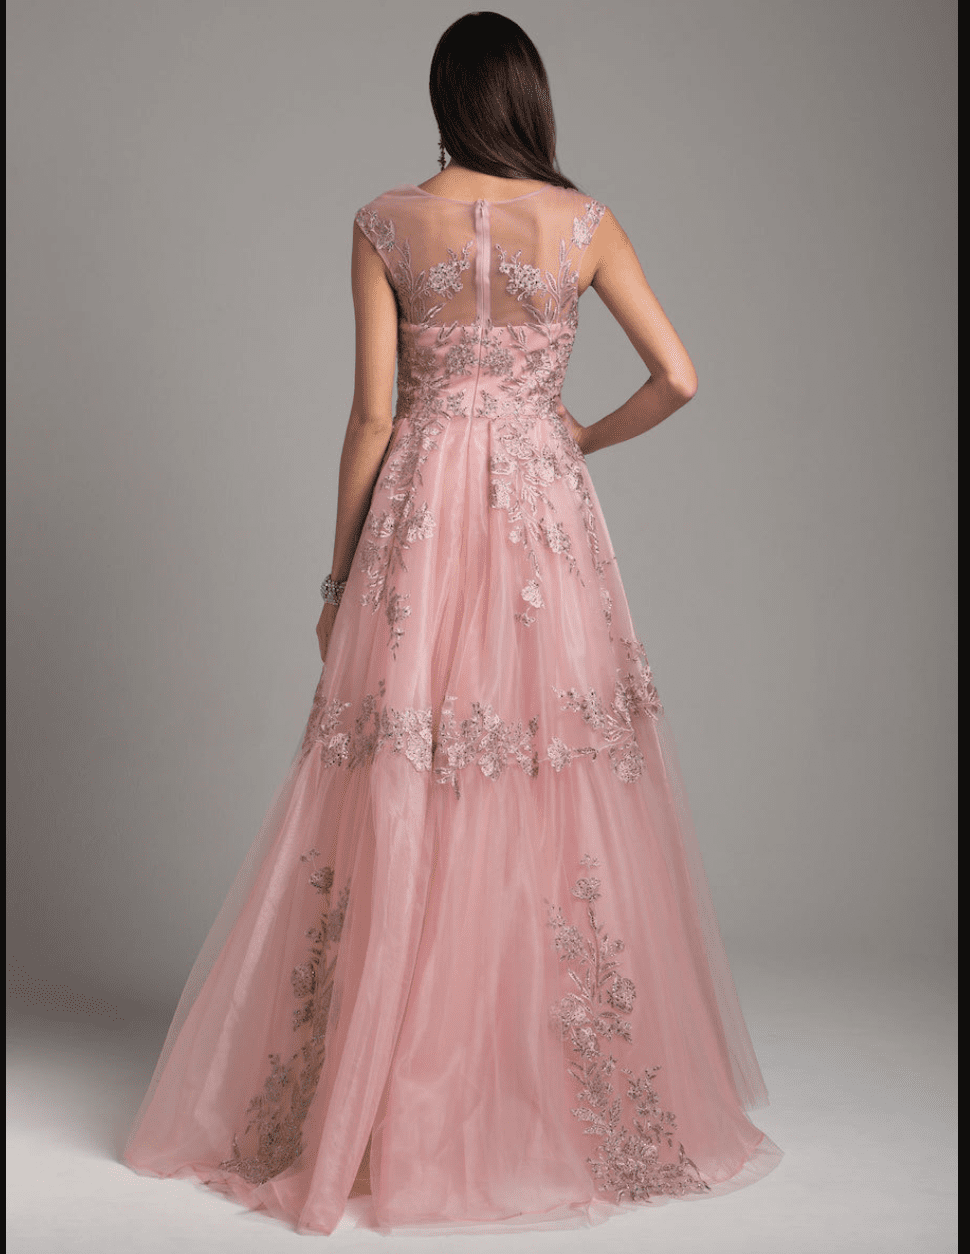 Lara Dresses - 29946 Embellished Cap Sleeve Illusion Bateau Ballgown in Pink